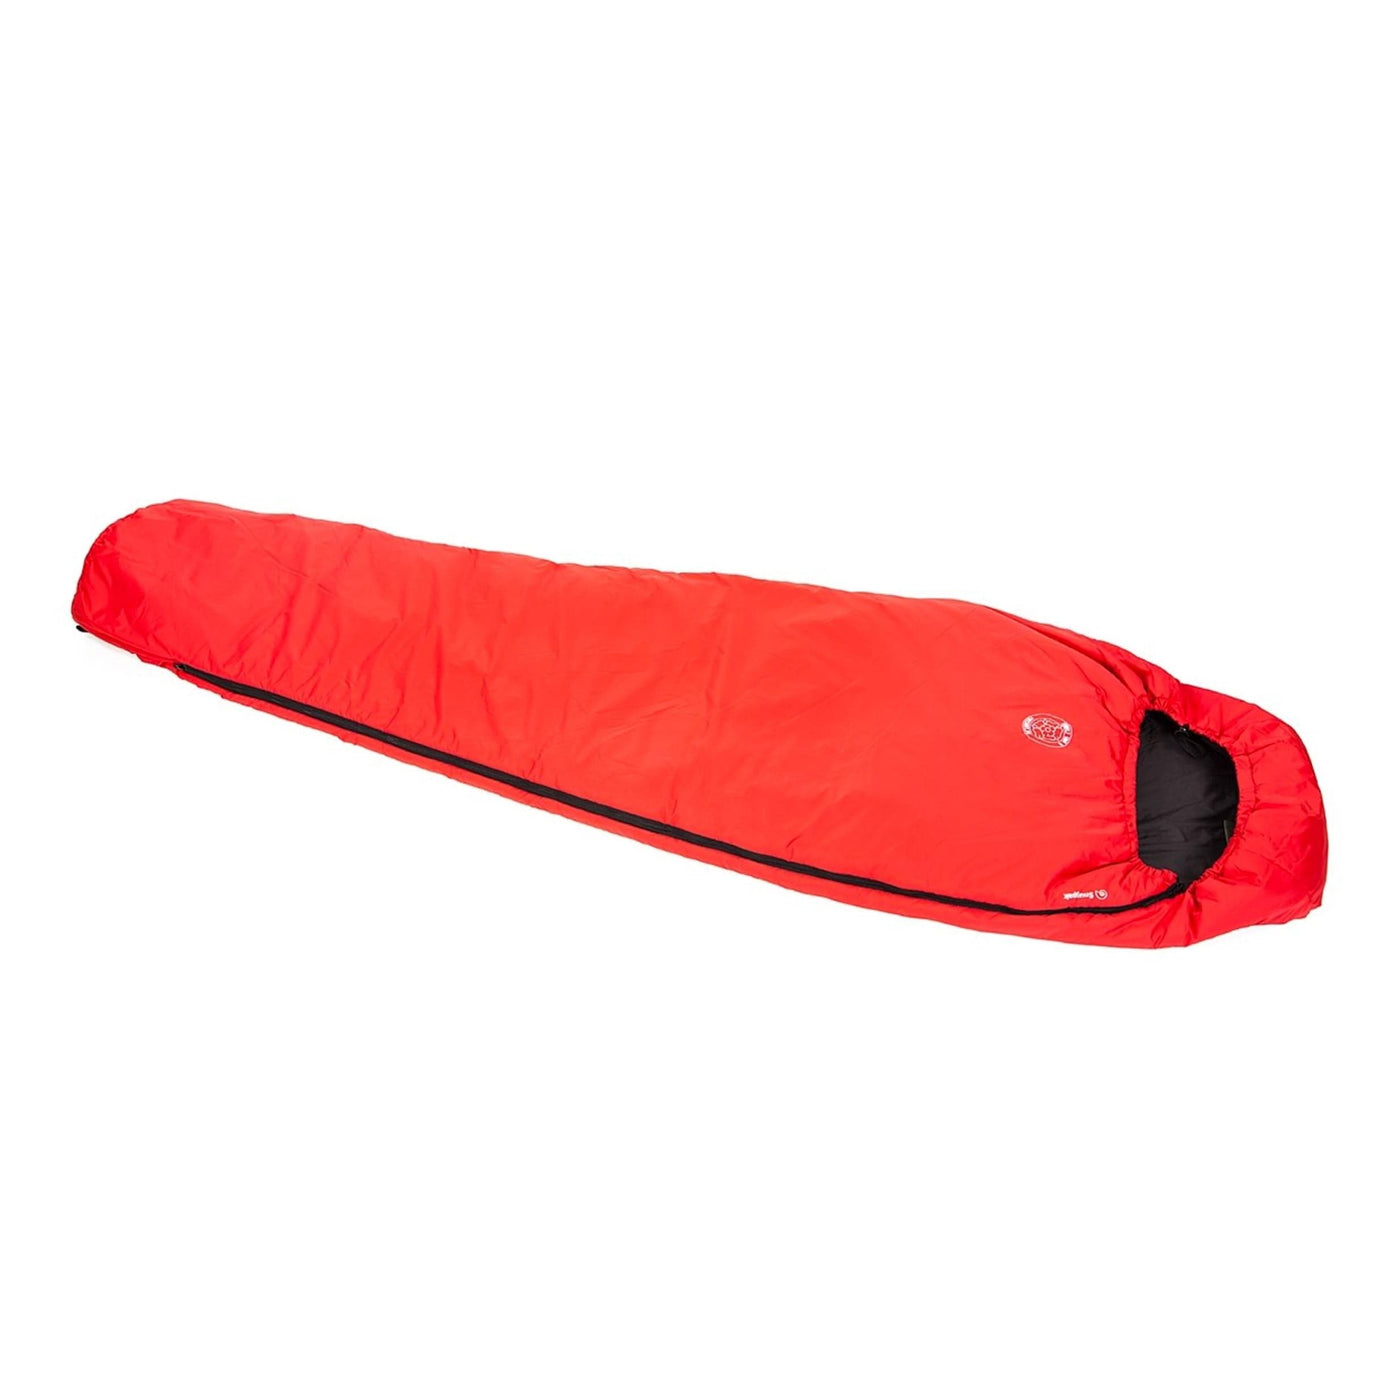 Snugpak Snugpak Softie 3 Solstice Sleeping Bag Red Zip Right Hand Camping And Outdoor